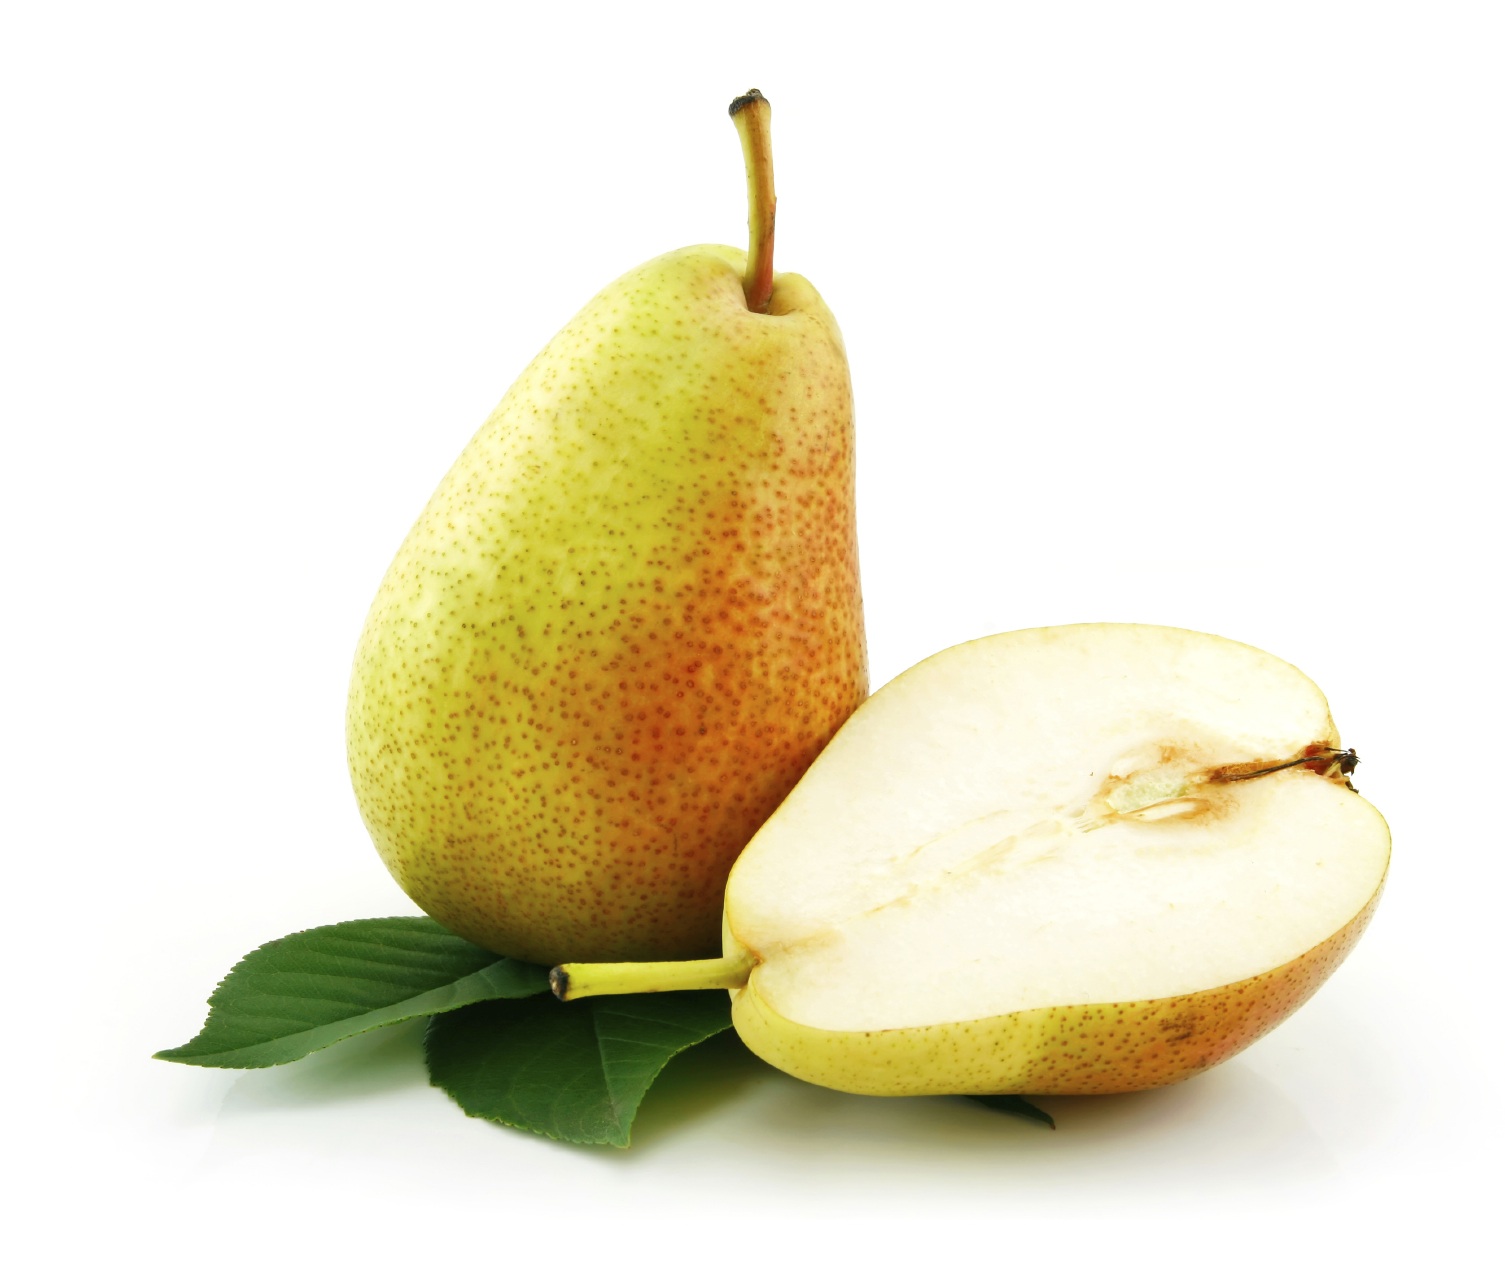 Savingstar Healthy Offer: Save 20% on Pears - FTM